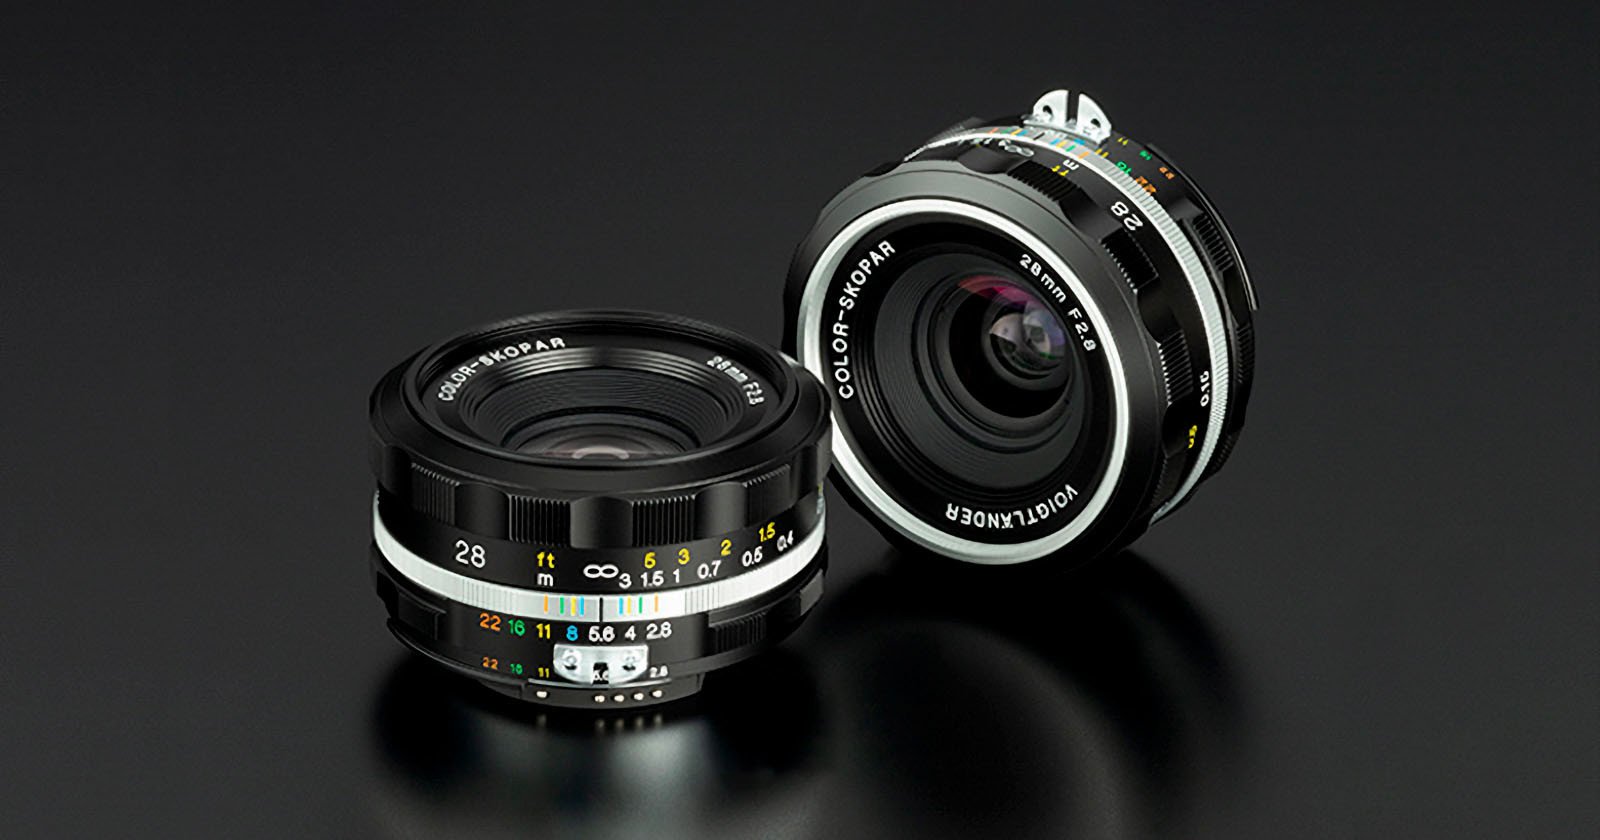 Cosina Launches the Voigtlander 28mm f/2.8 SL II S for Nikon F-Mount